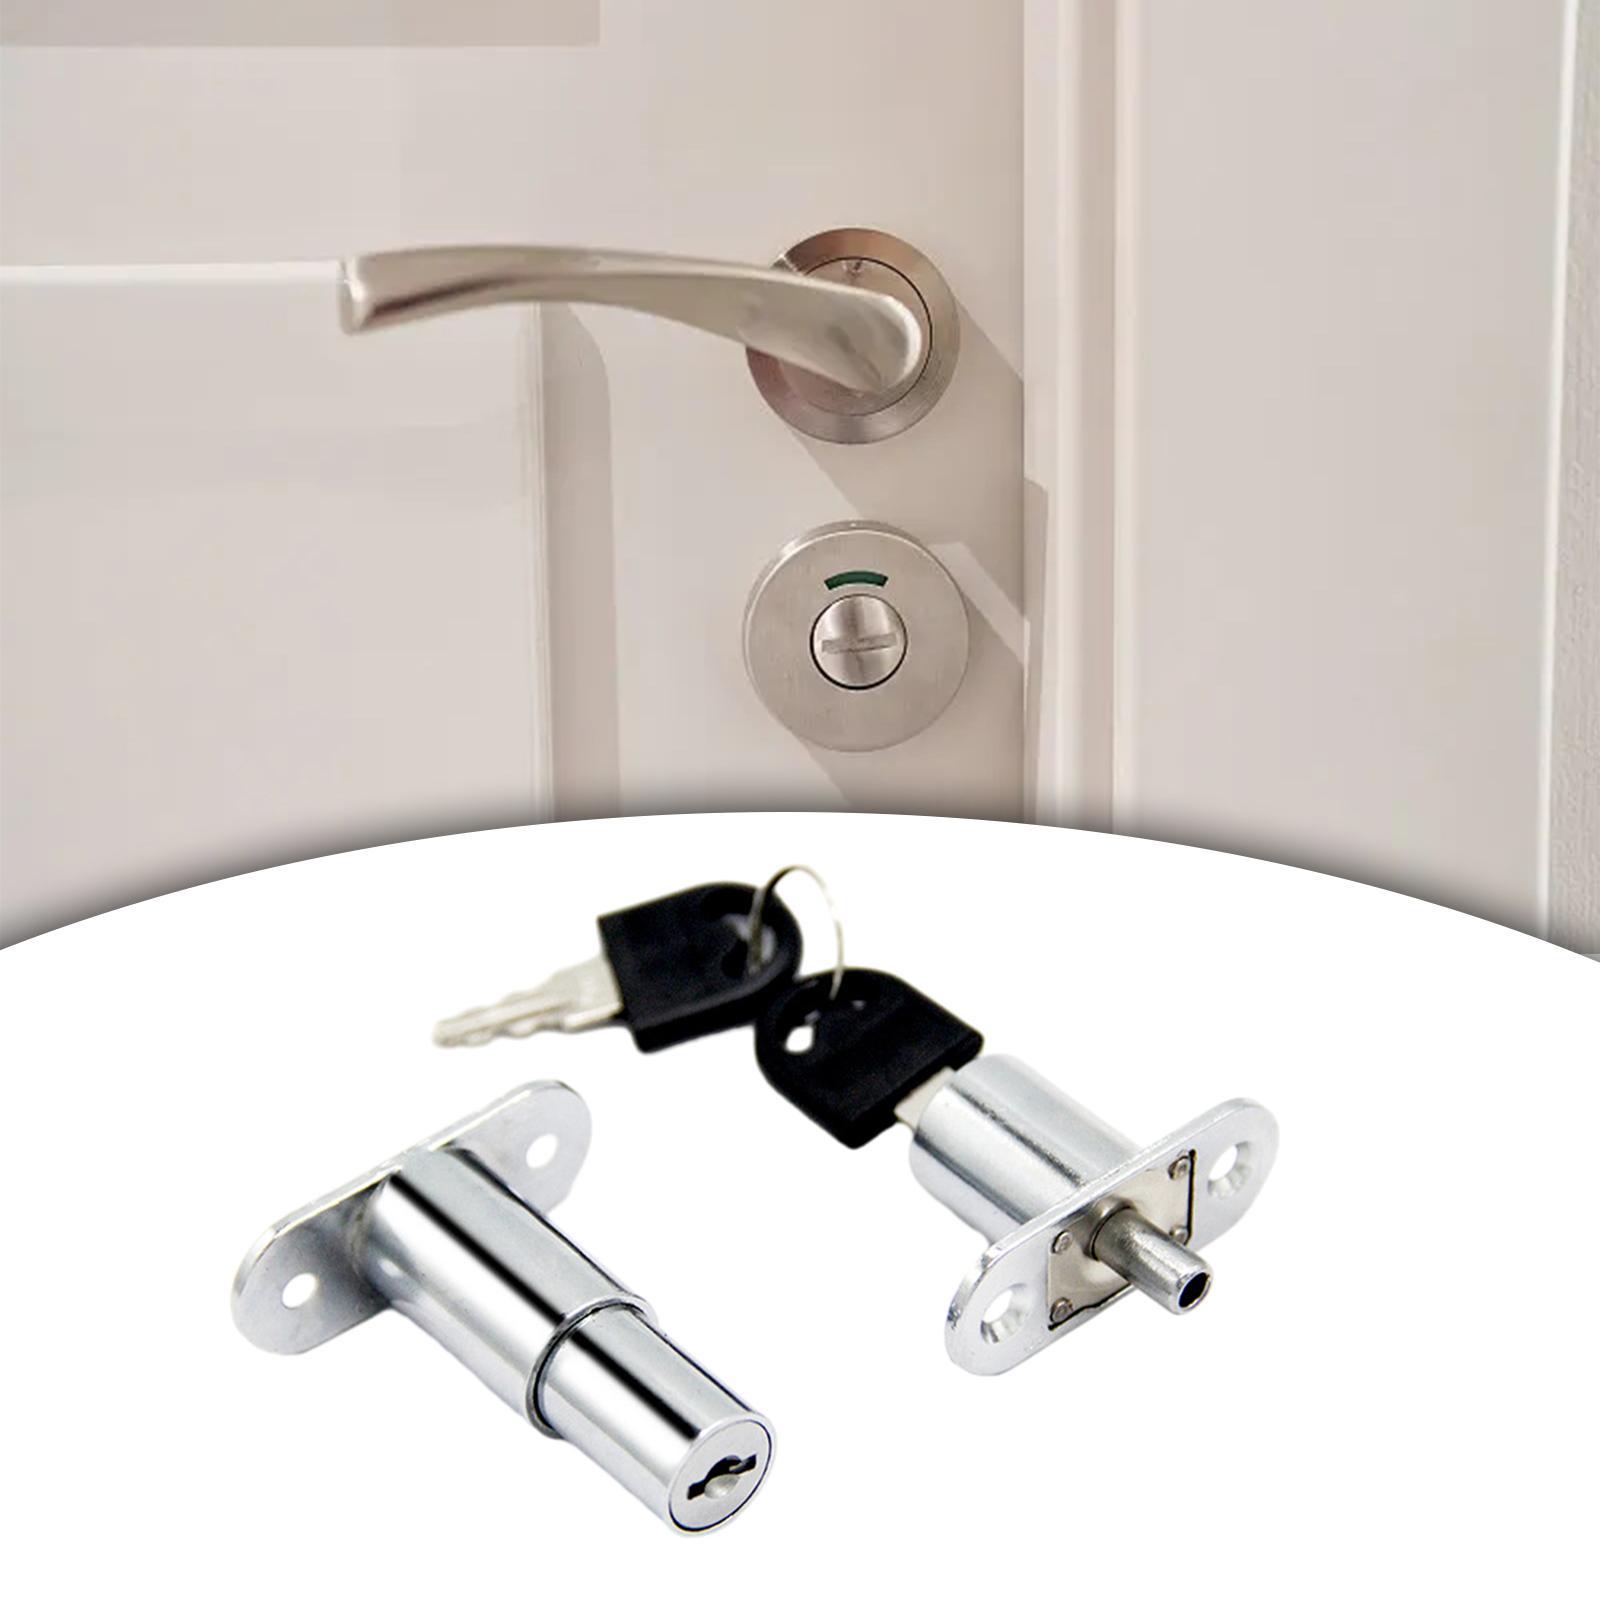 Sliding Door Window Lock with Keys Counter Lock for Fridge Lock Mailbox Lock